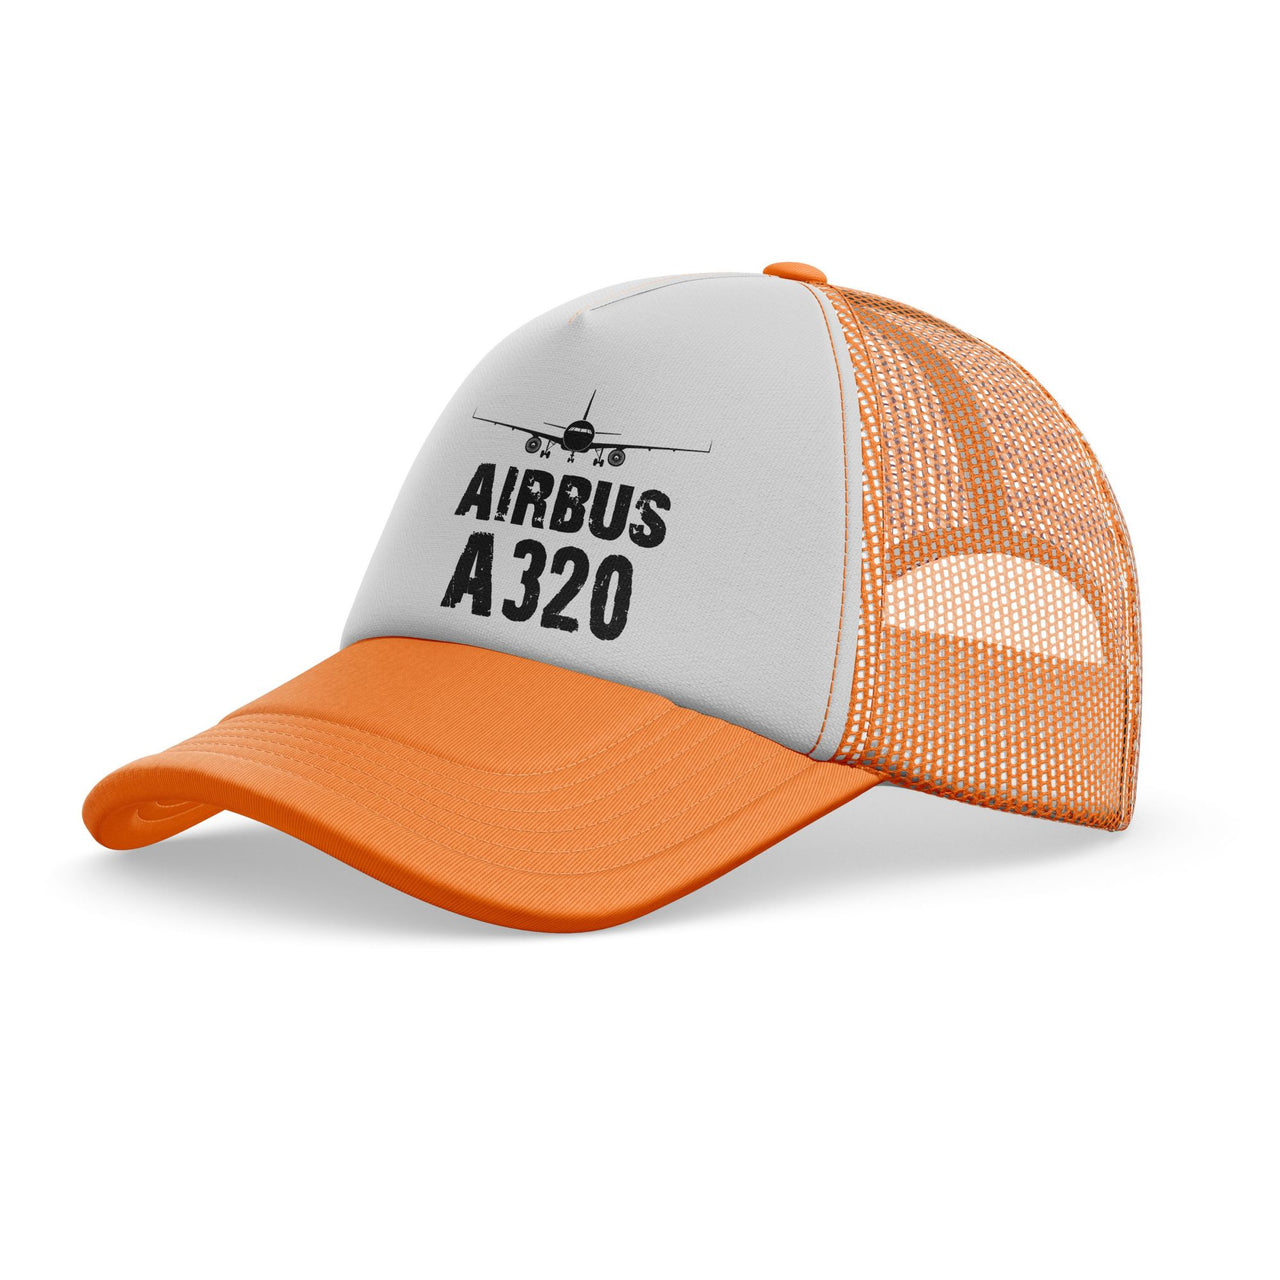 Airbus A320 & Plane Designed Trucker Caps & Hats